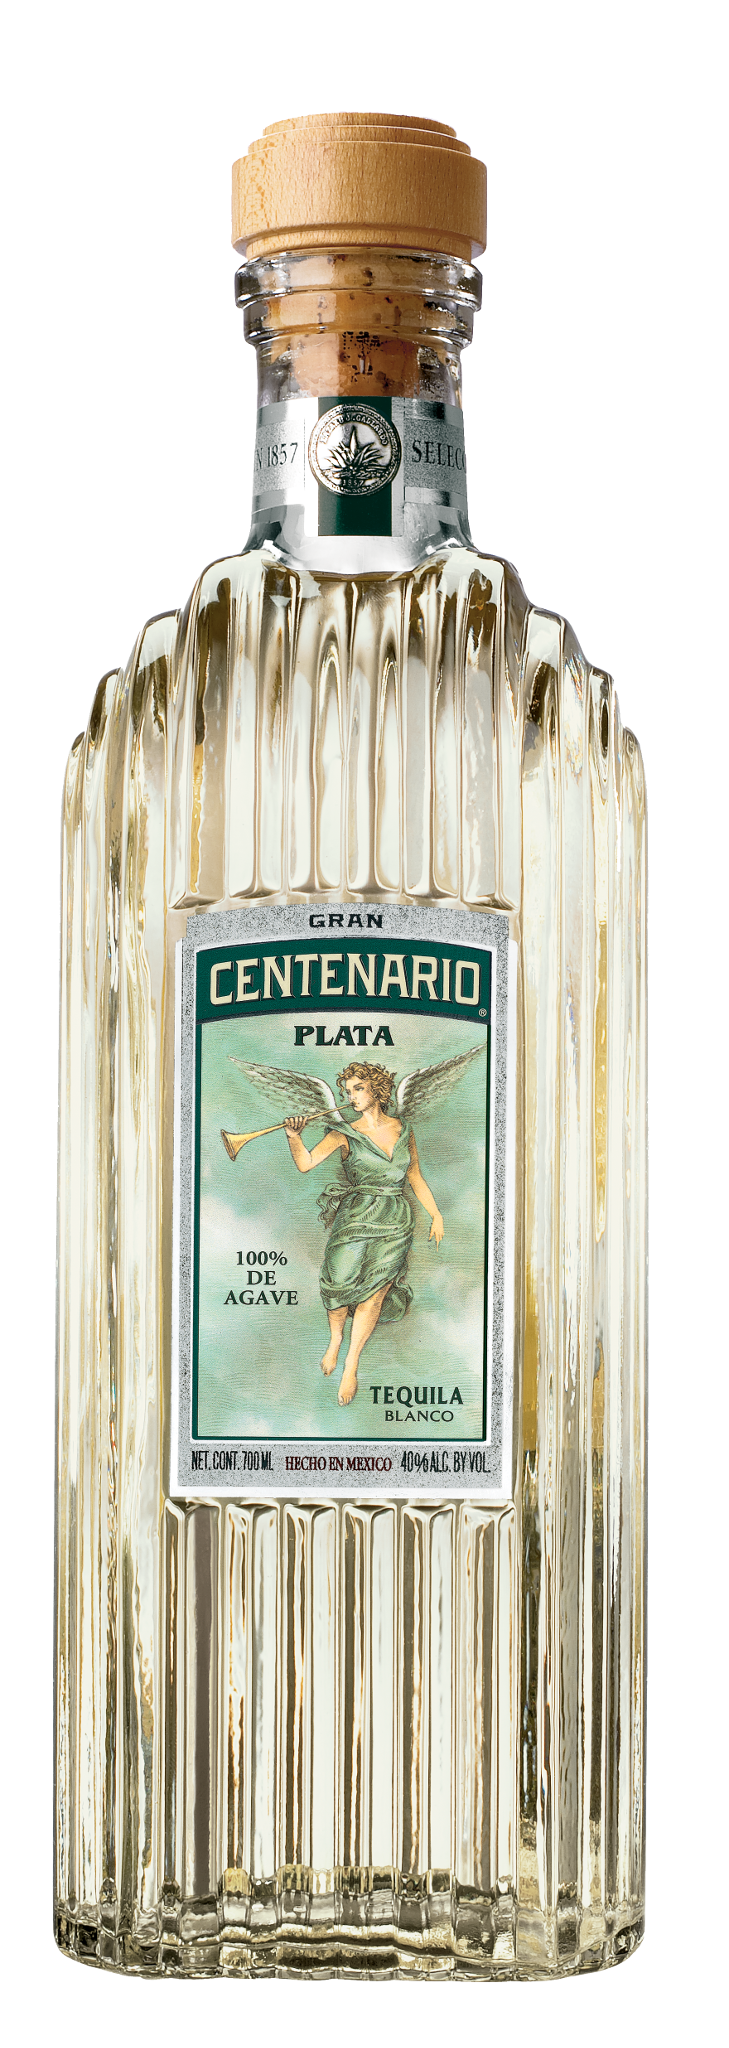 Rượu Gran Centenario Plata Tequila 38% 1x0.7L